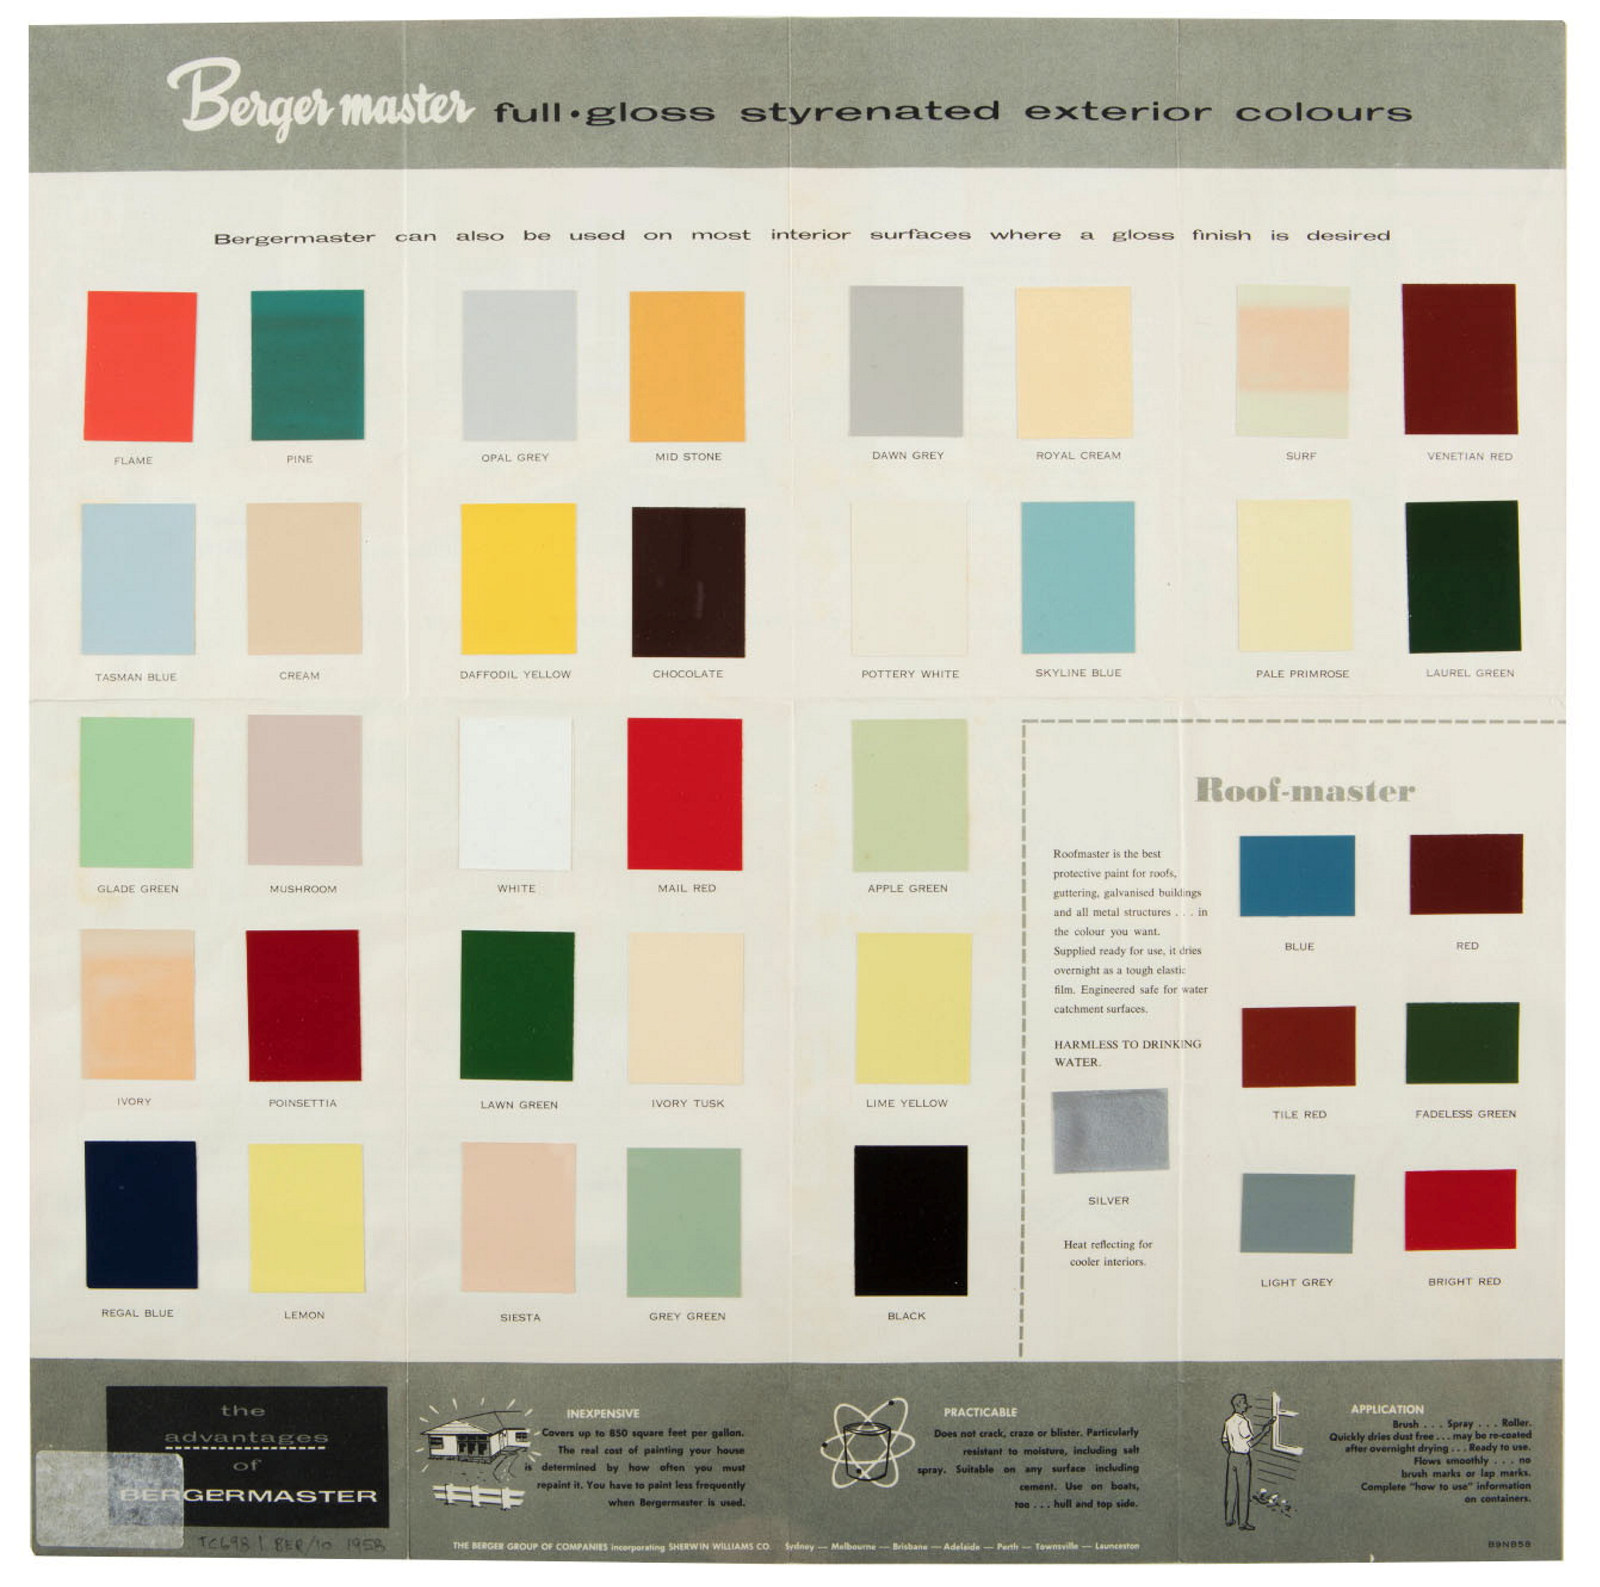 Colour chart for Bergermaster full gloss styrenated exterior paint, 1958